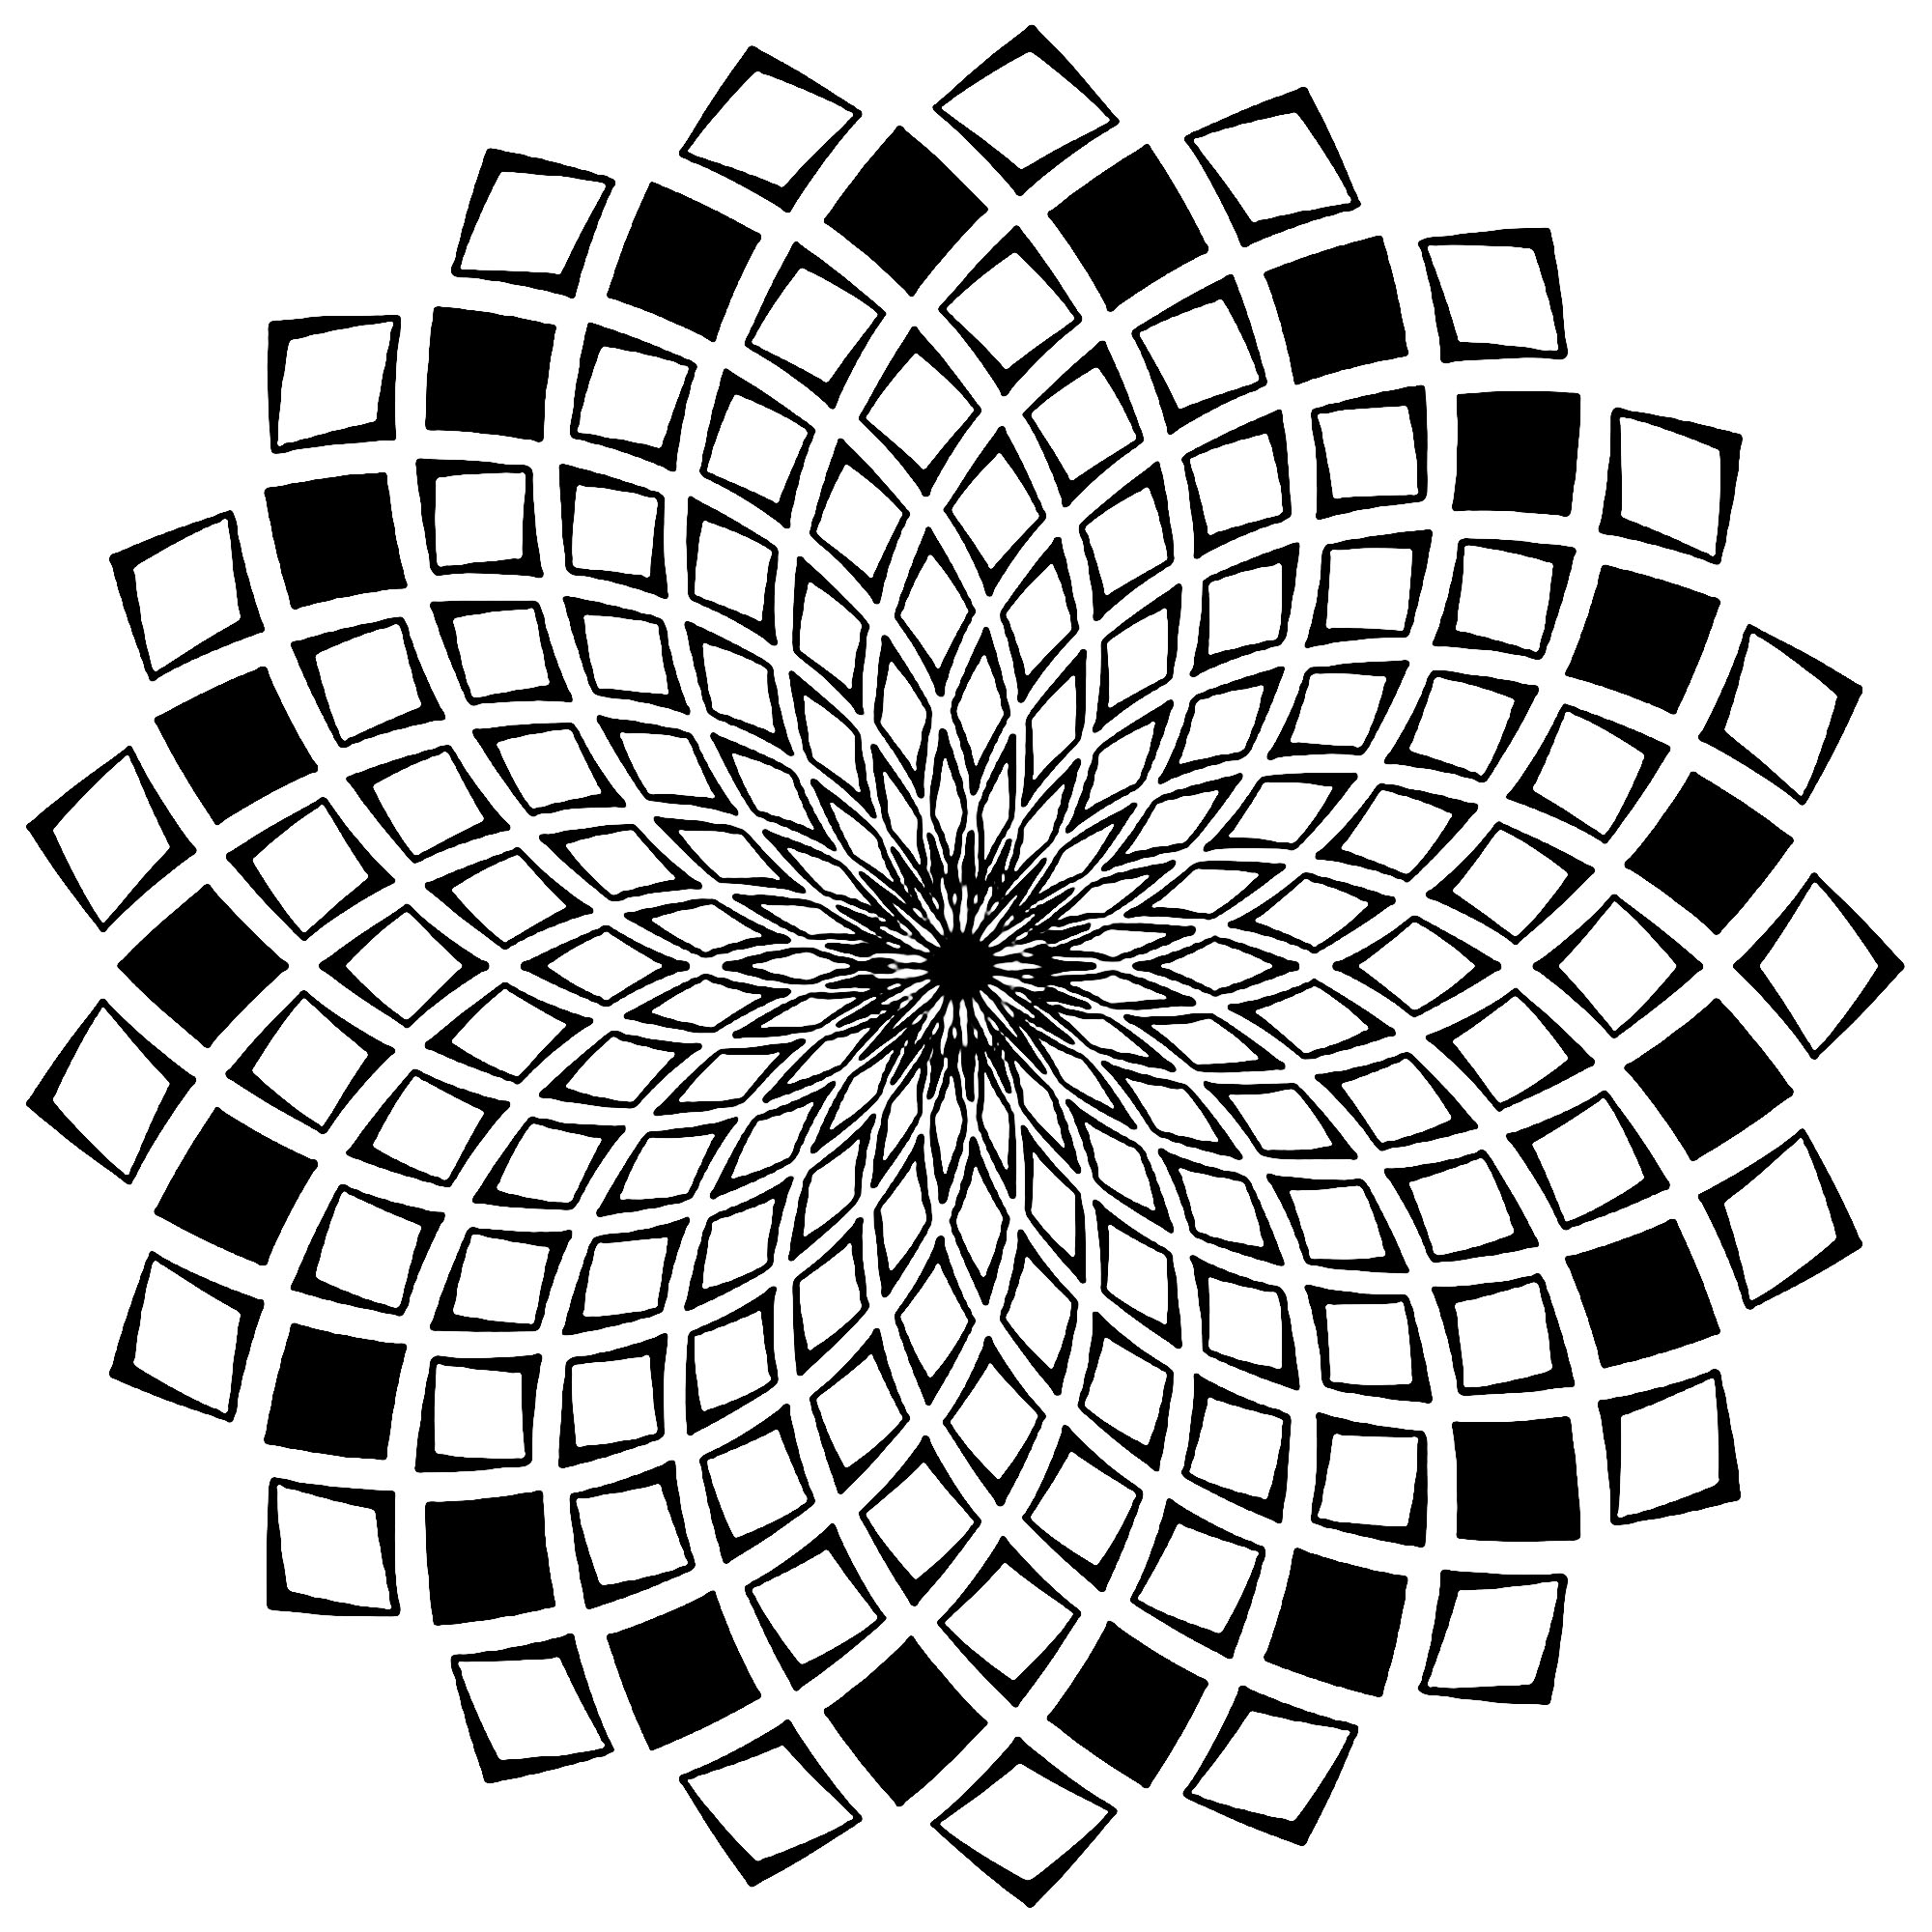 Mandala composed of little squares